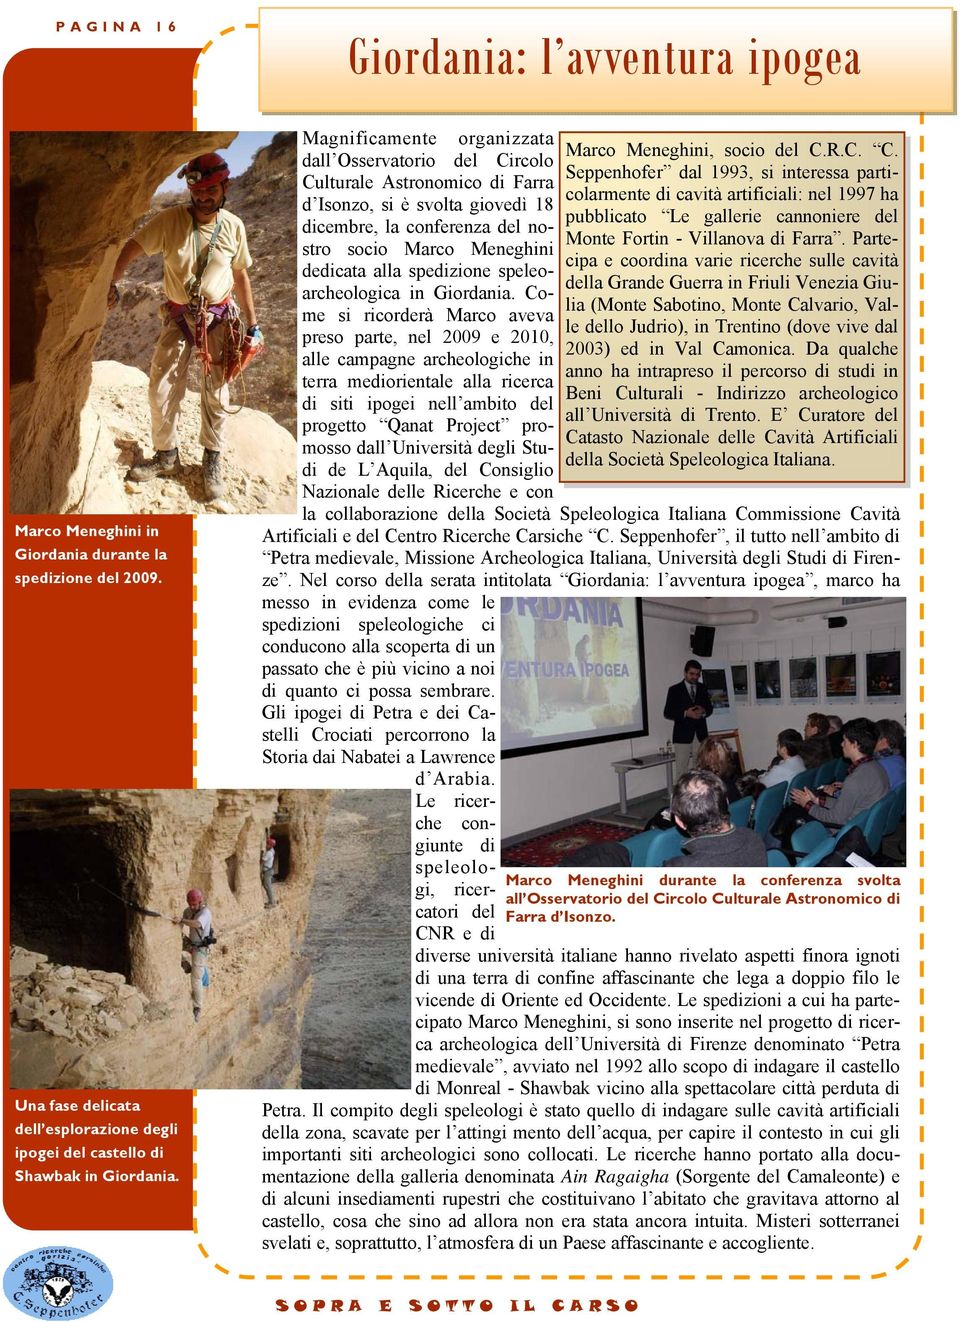 spedizione speleoarcheologica in Giordania.